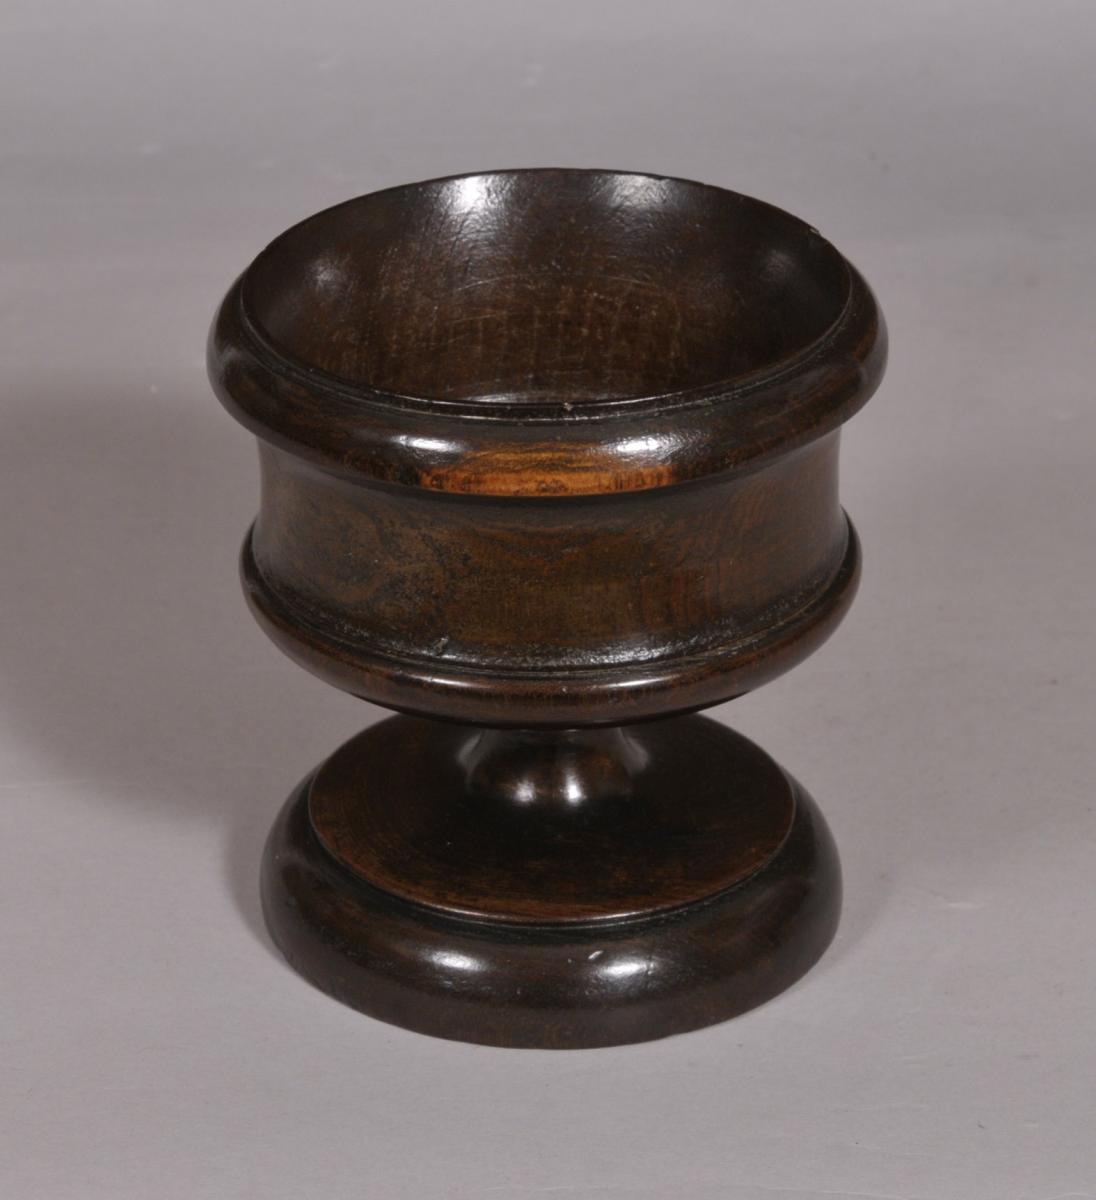 S/4204 Antique Treen Early 19th Century Laburnum Wood Salt